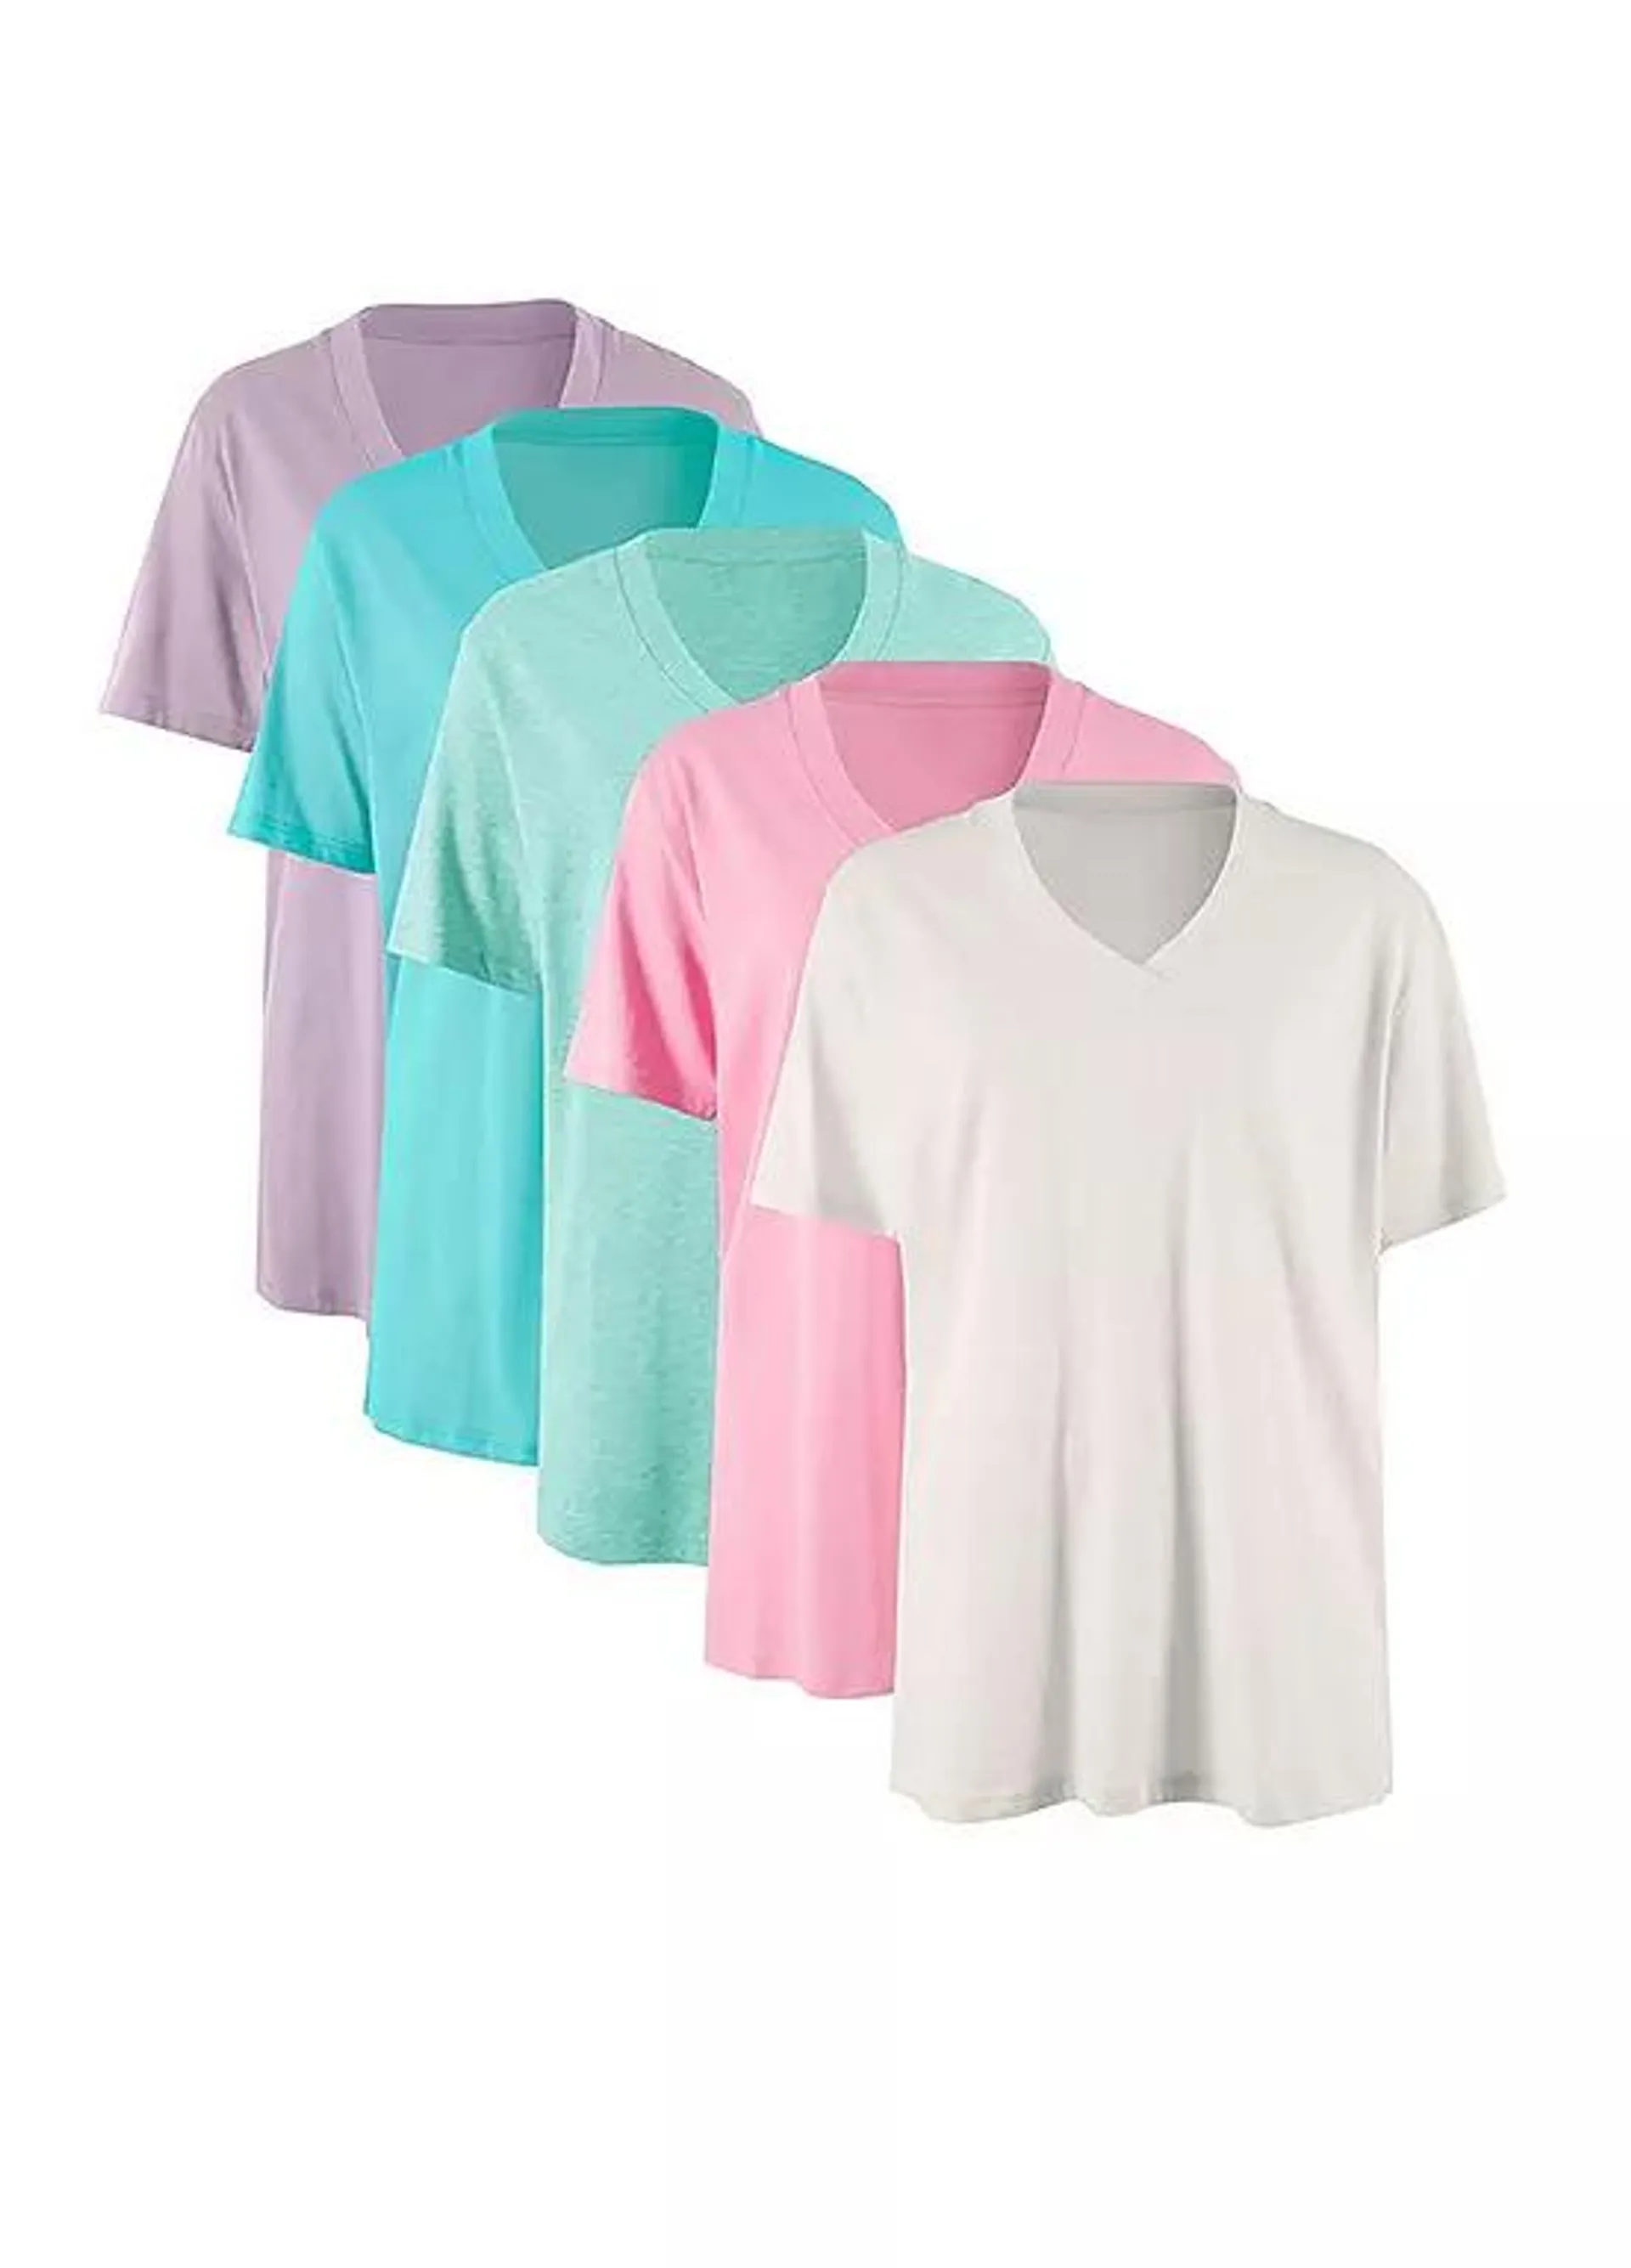 bonprix Pack of 5 Basic V-Neck T-Shirts